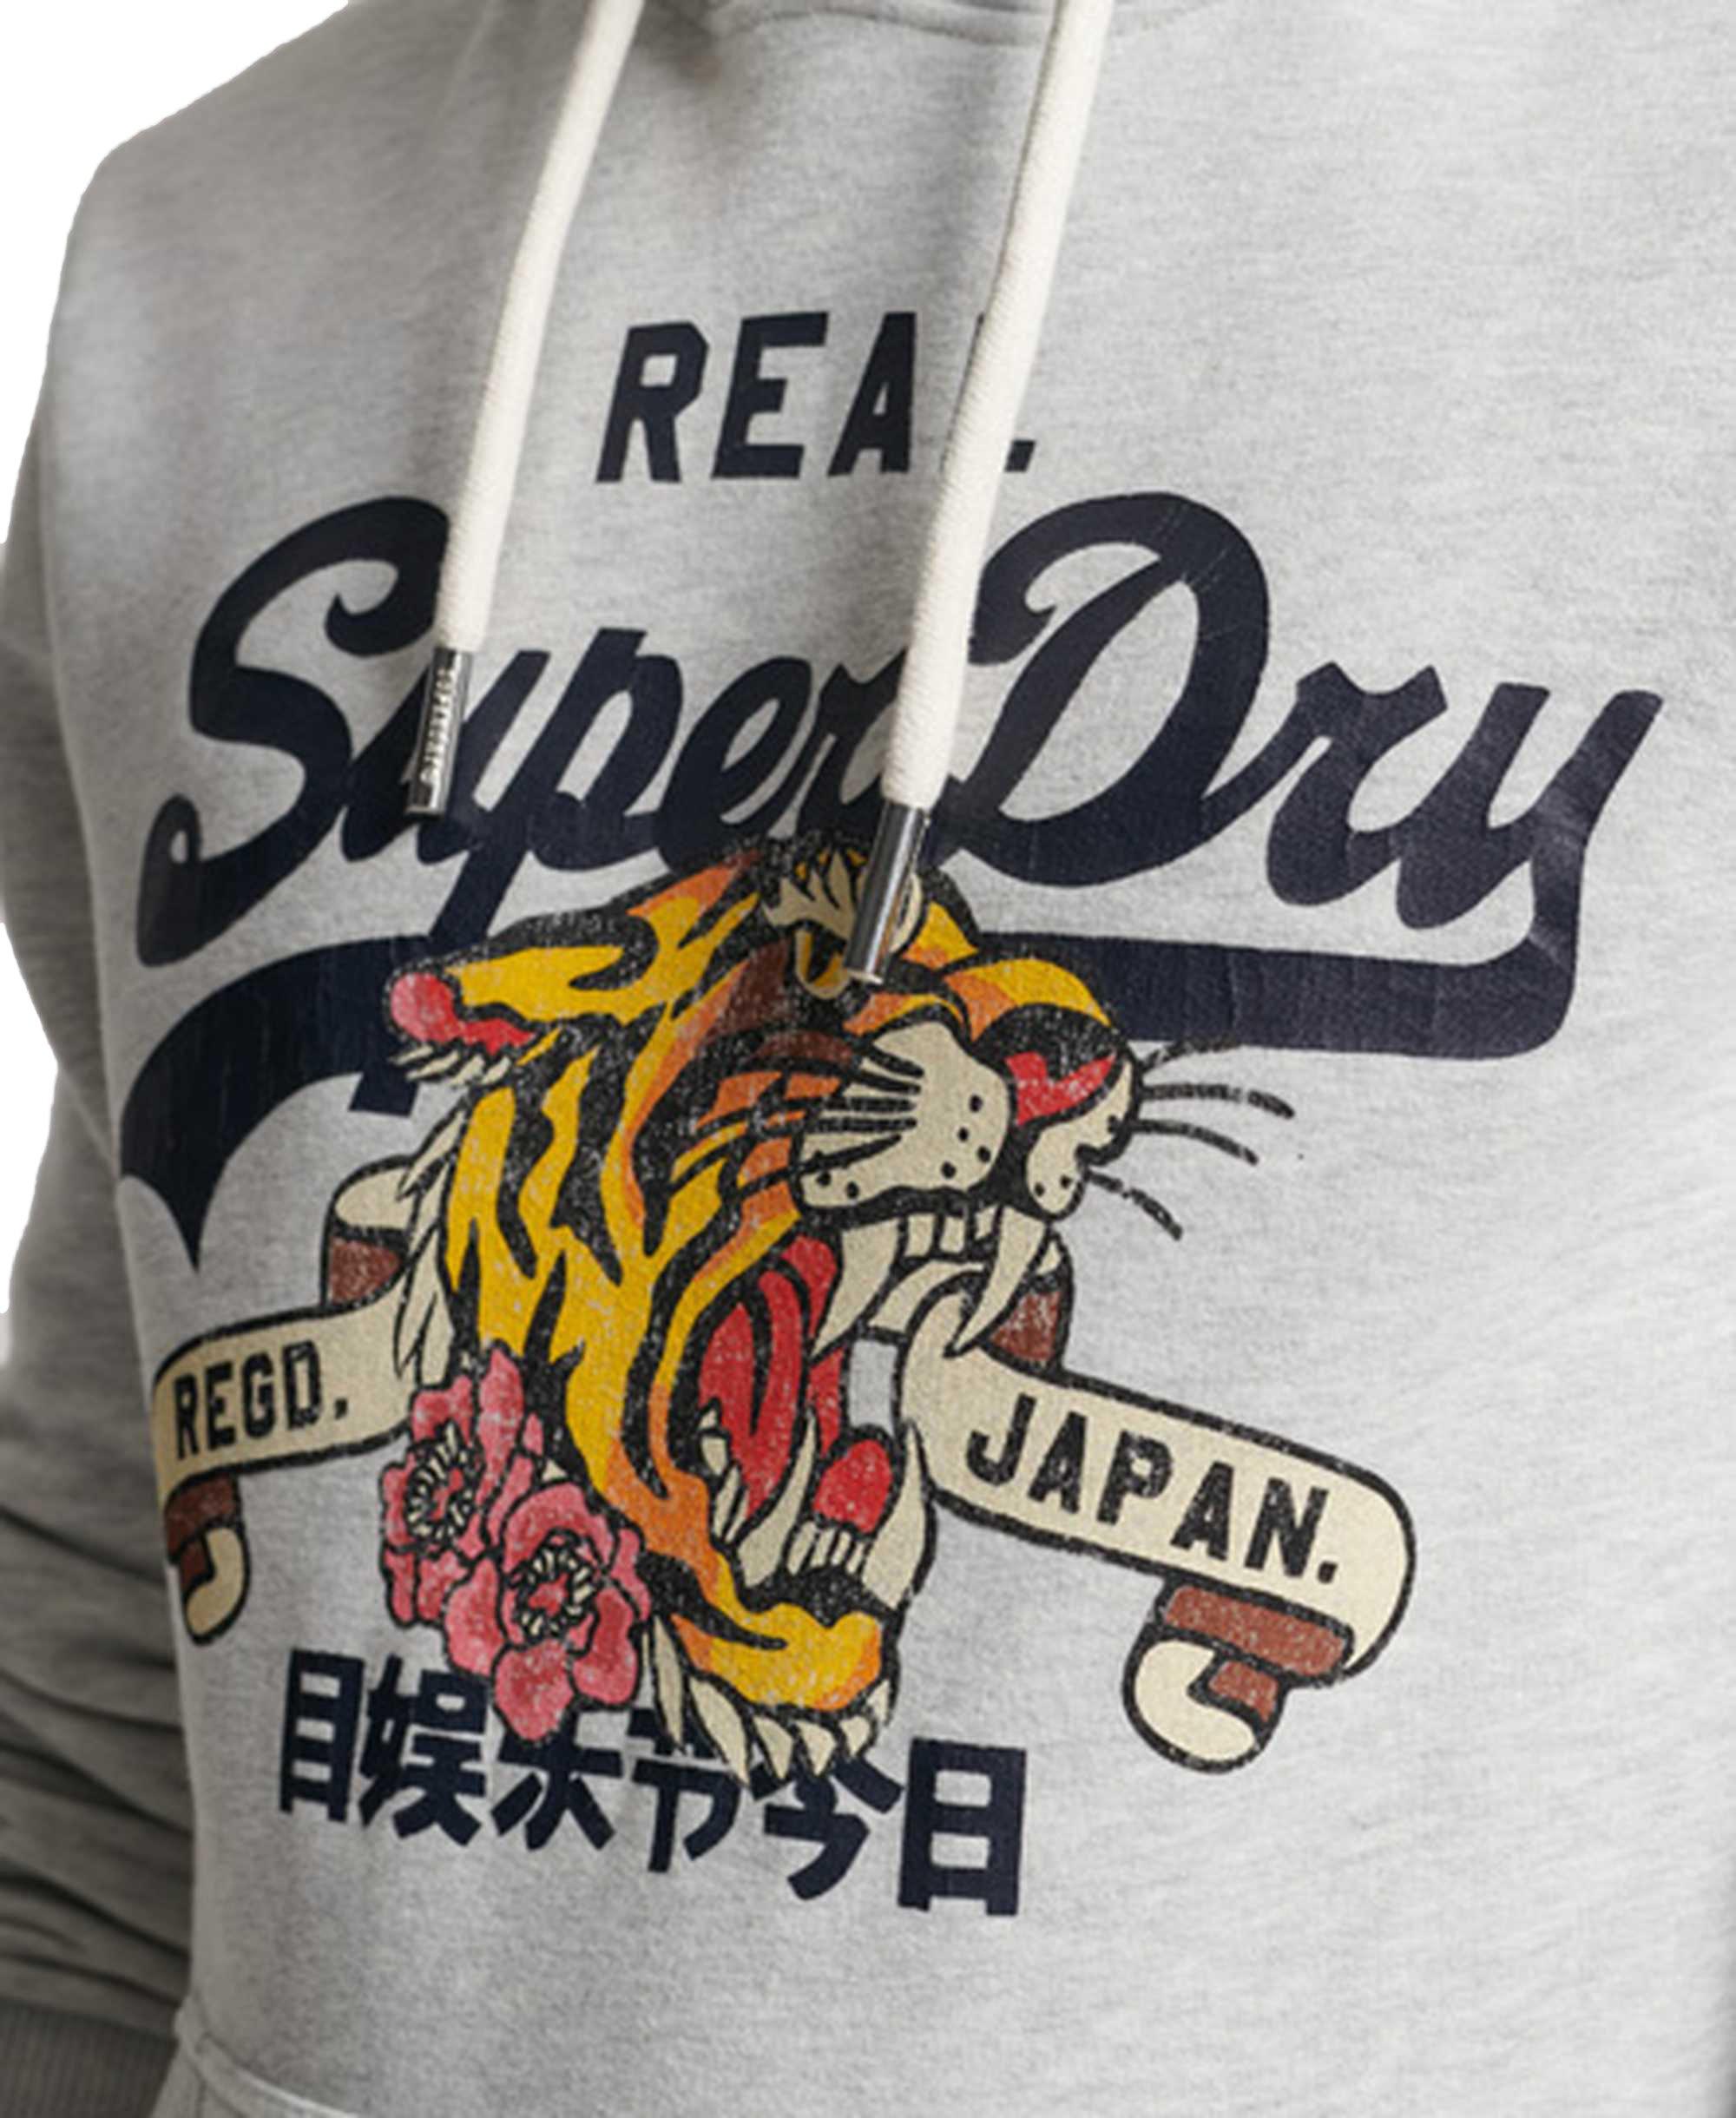 Superdry  Sweat-shirt  Confortable à porter-VINTAGE NARRATIVE HOOD 